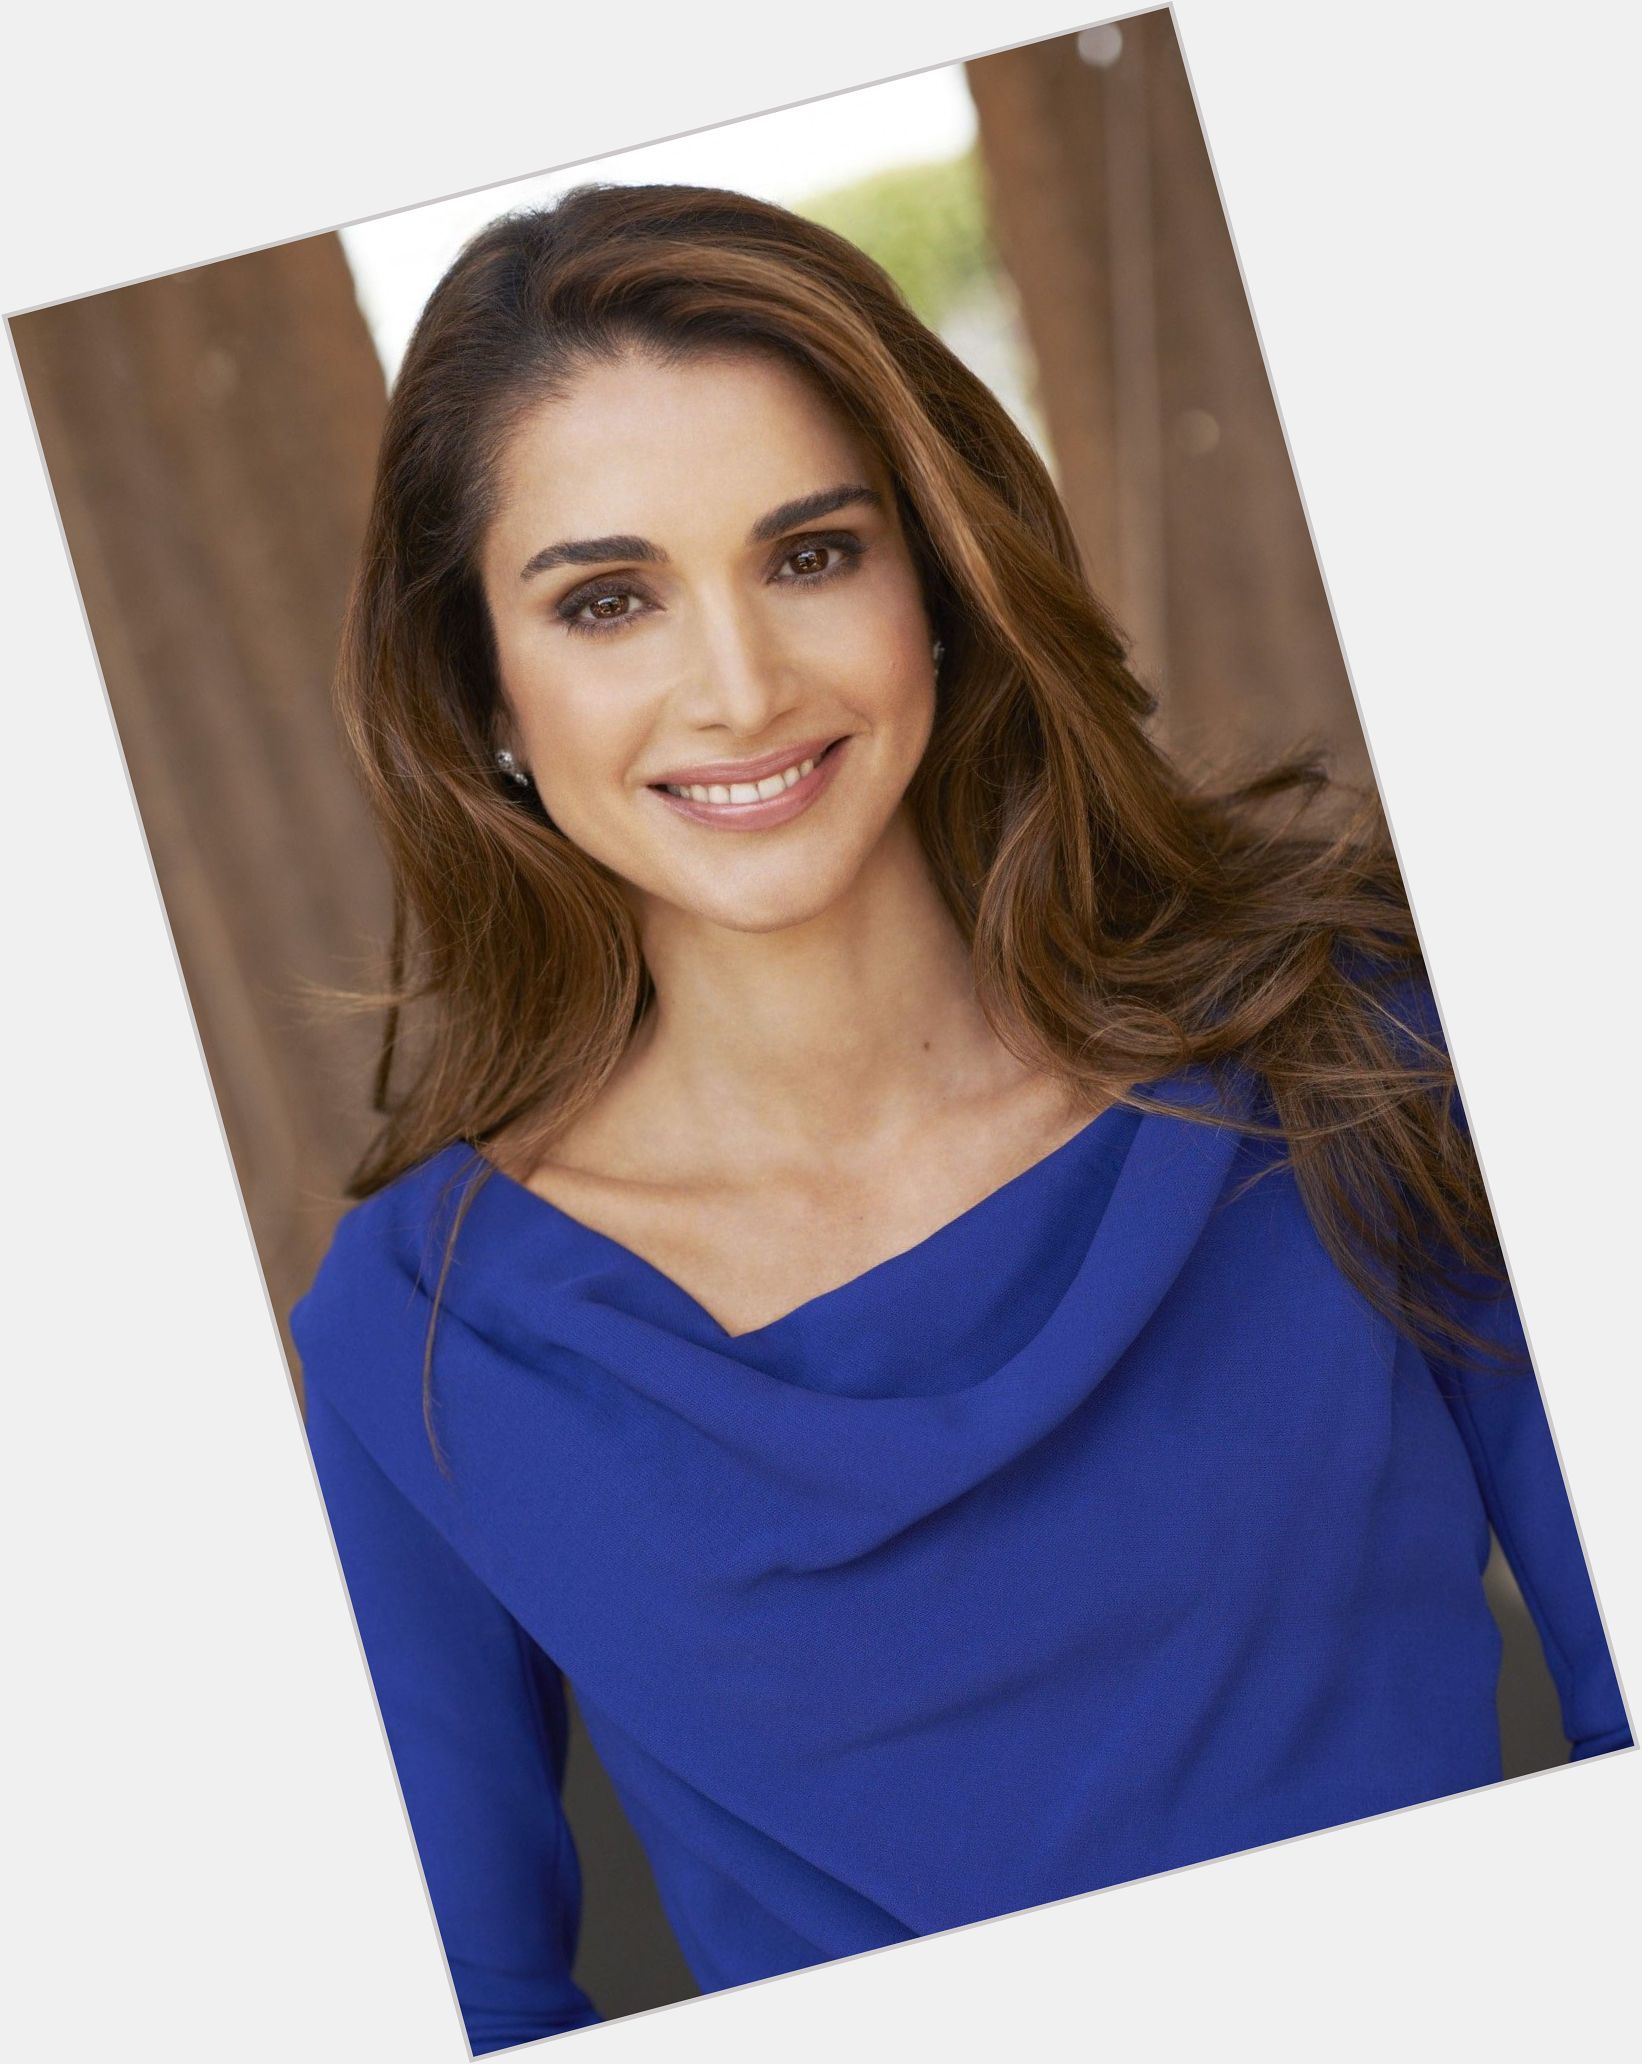 Https://fanpagepress.net/m/Q/Queen Rania Of Jordan Picture 4